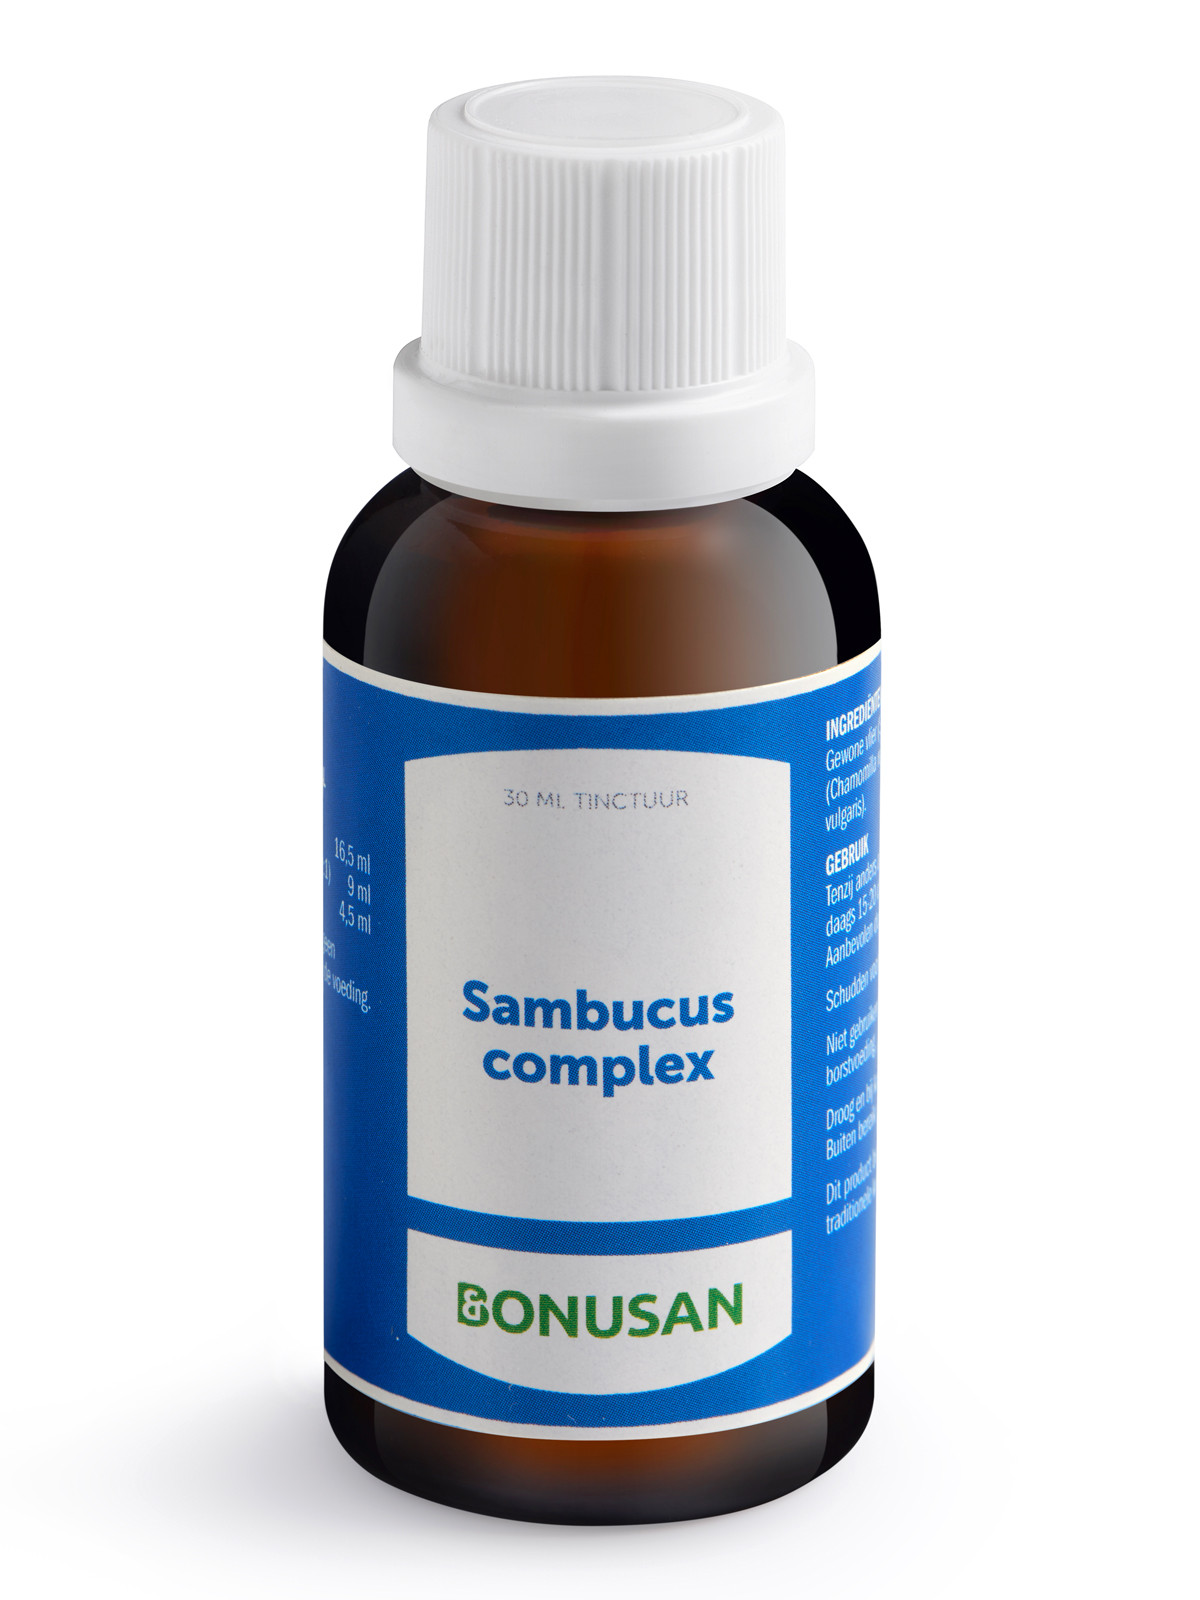 Bonusan - Sambucus complex tinctuur